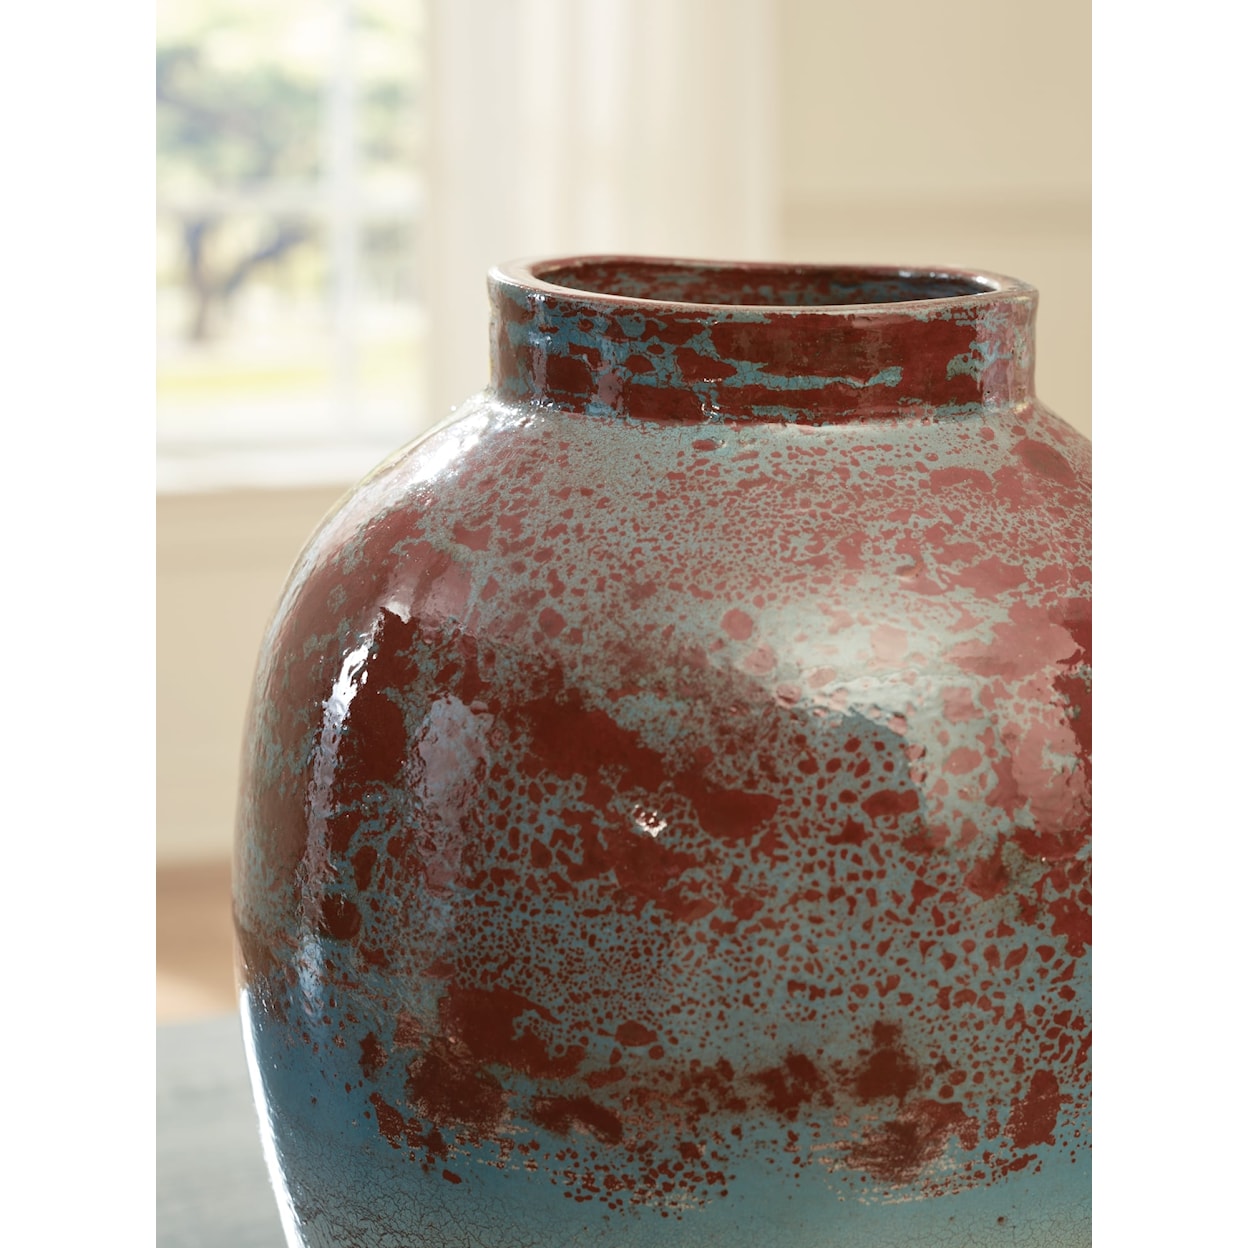 Michael Alan Select Turkingsly Vase